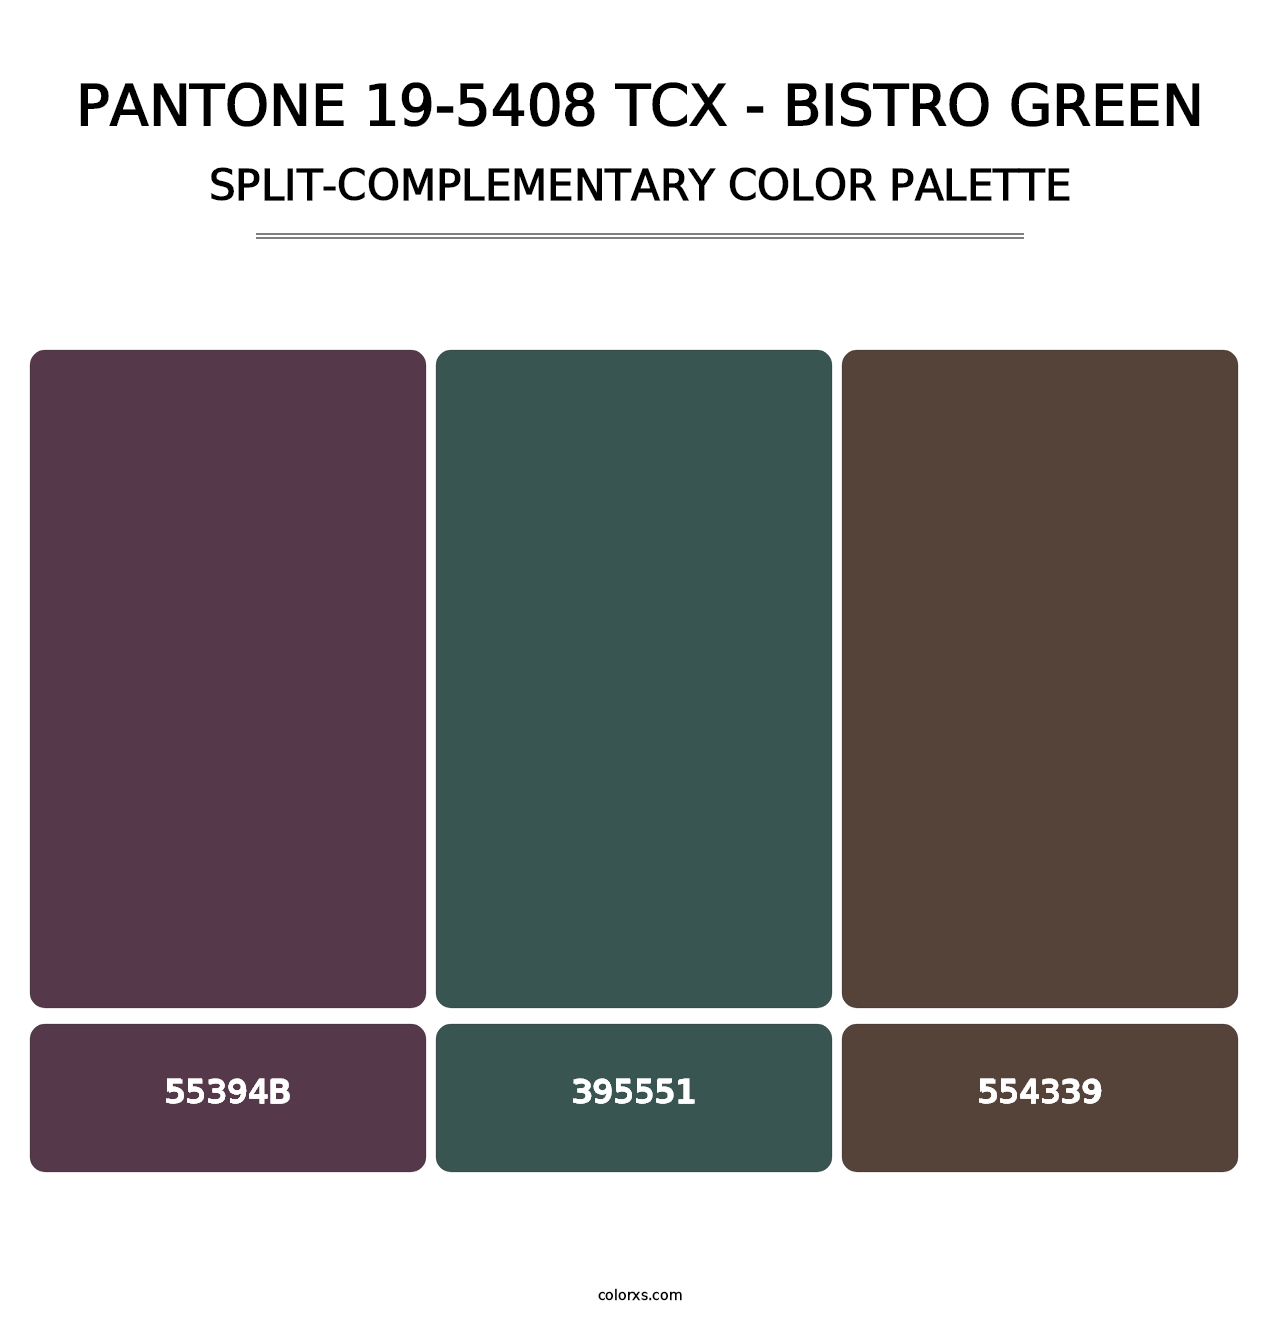 PANTONE 19-5408 TCX - Bistro Green - Split-Complementary Color Palette